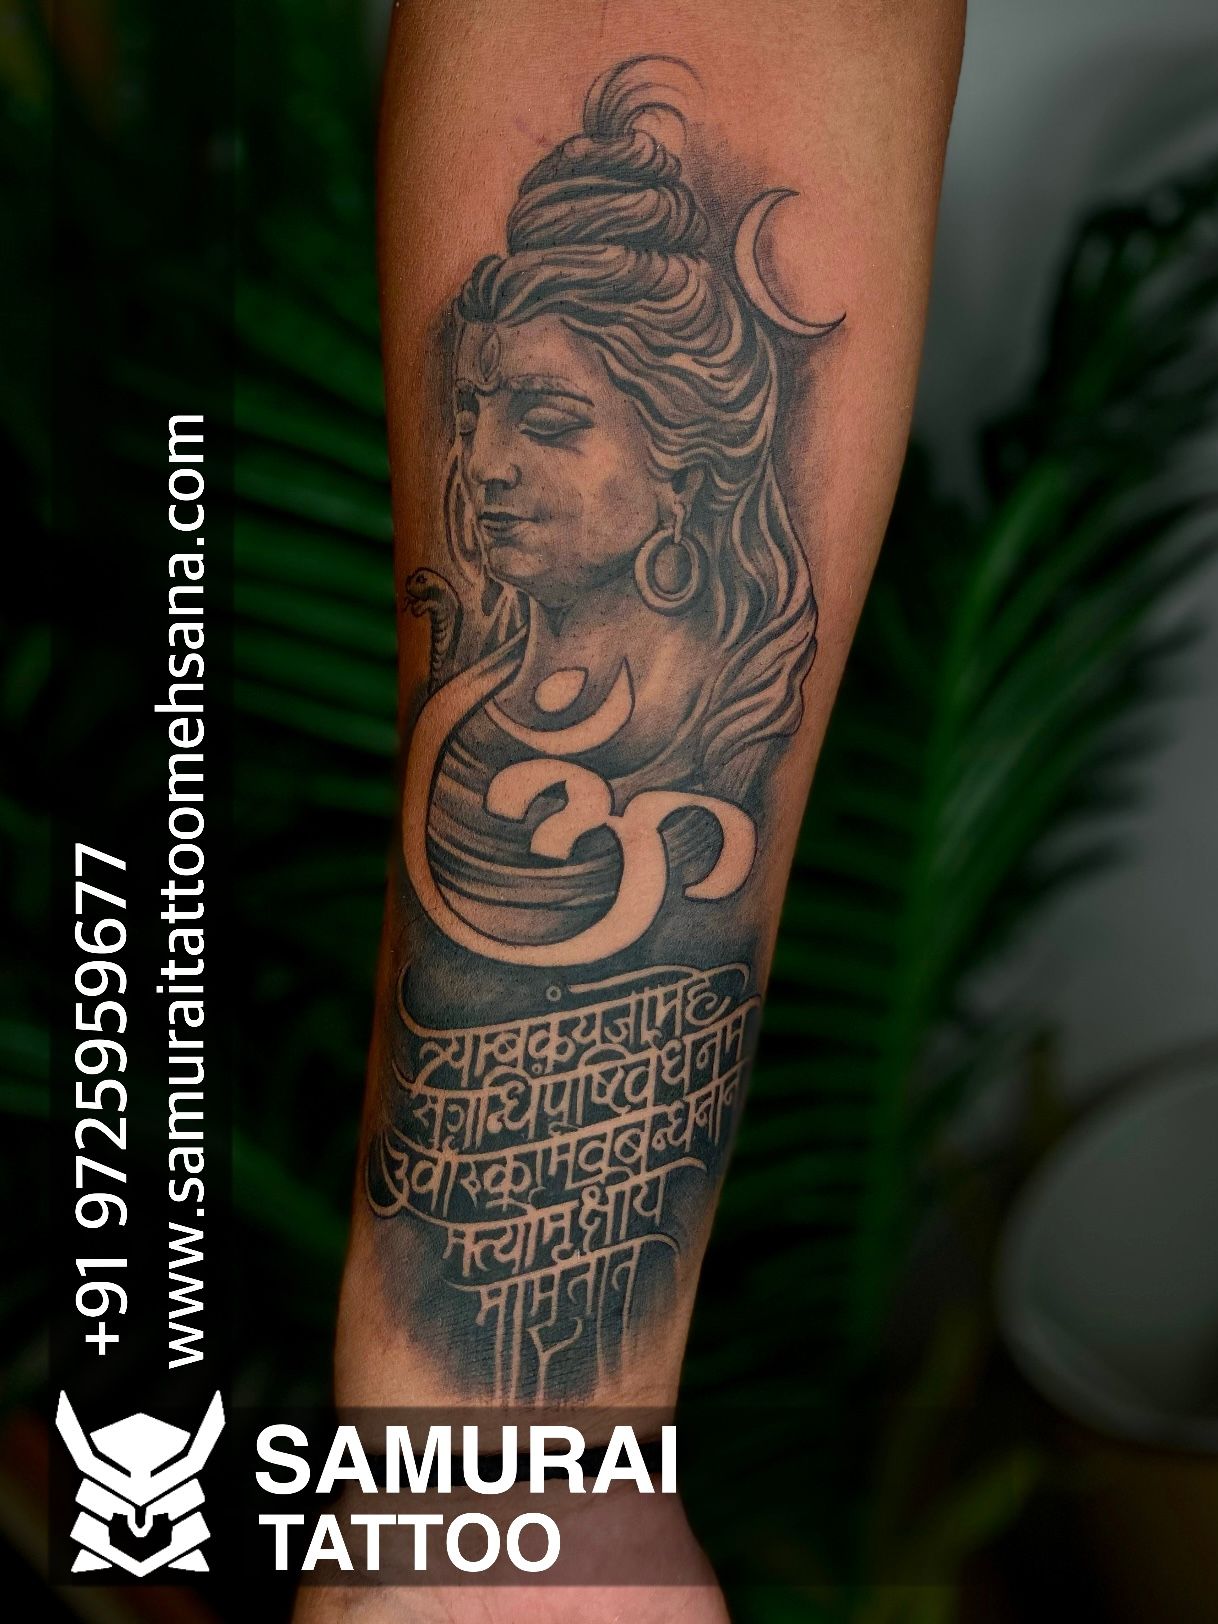 Tarazwa Tattoo Studio on X: 